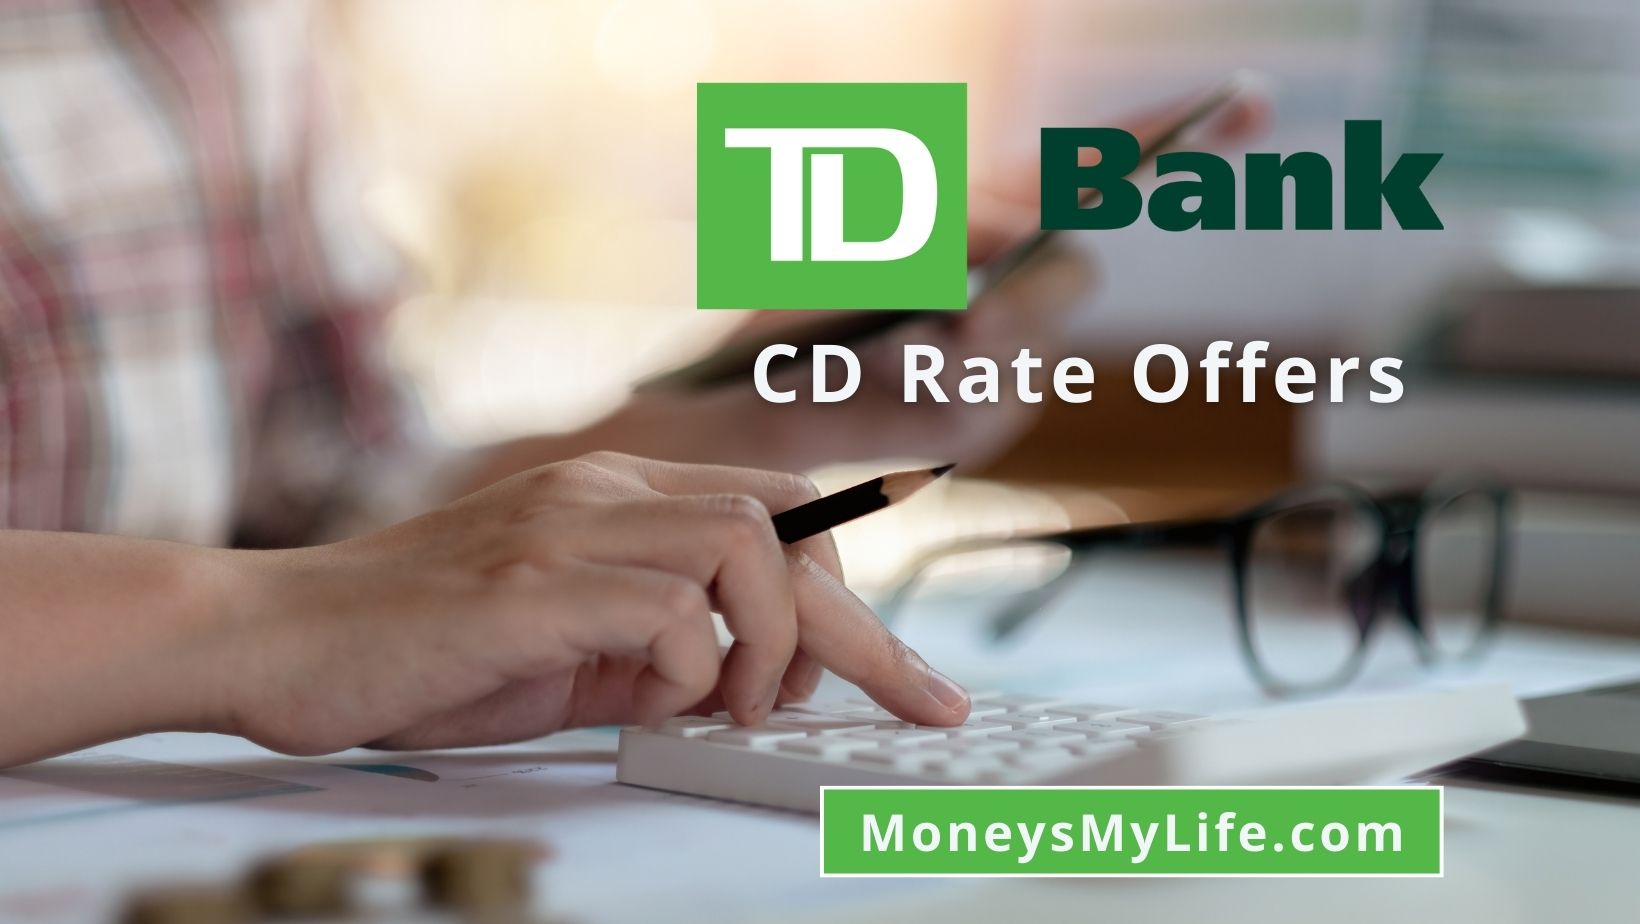 TD Bank Certificate of Deposit (CD) Rates